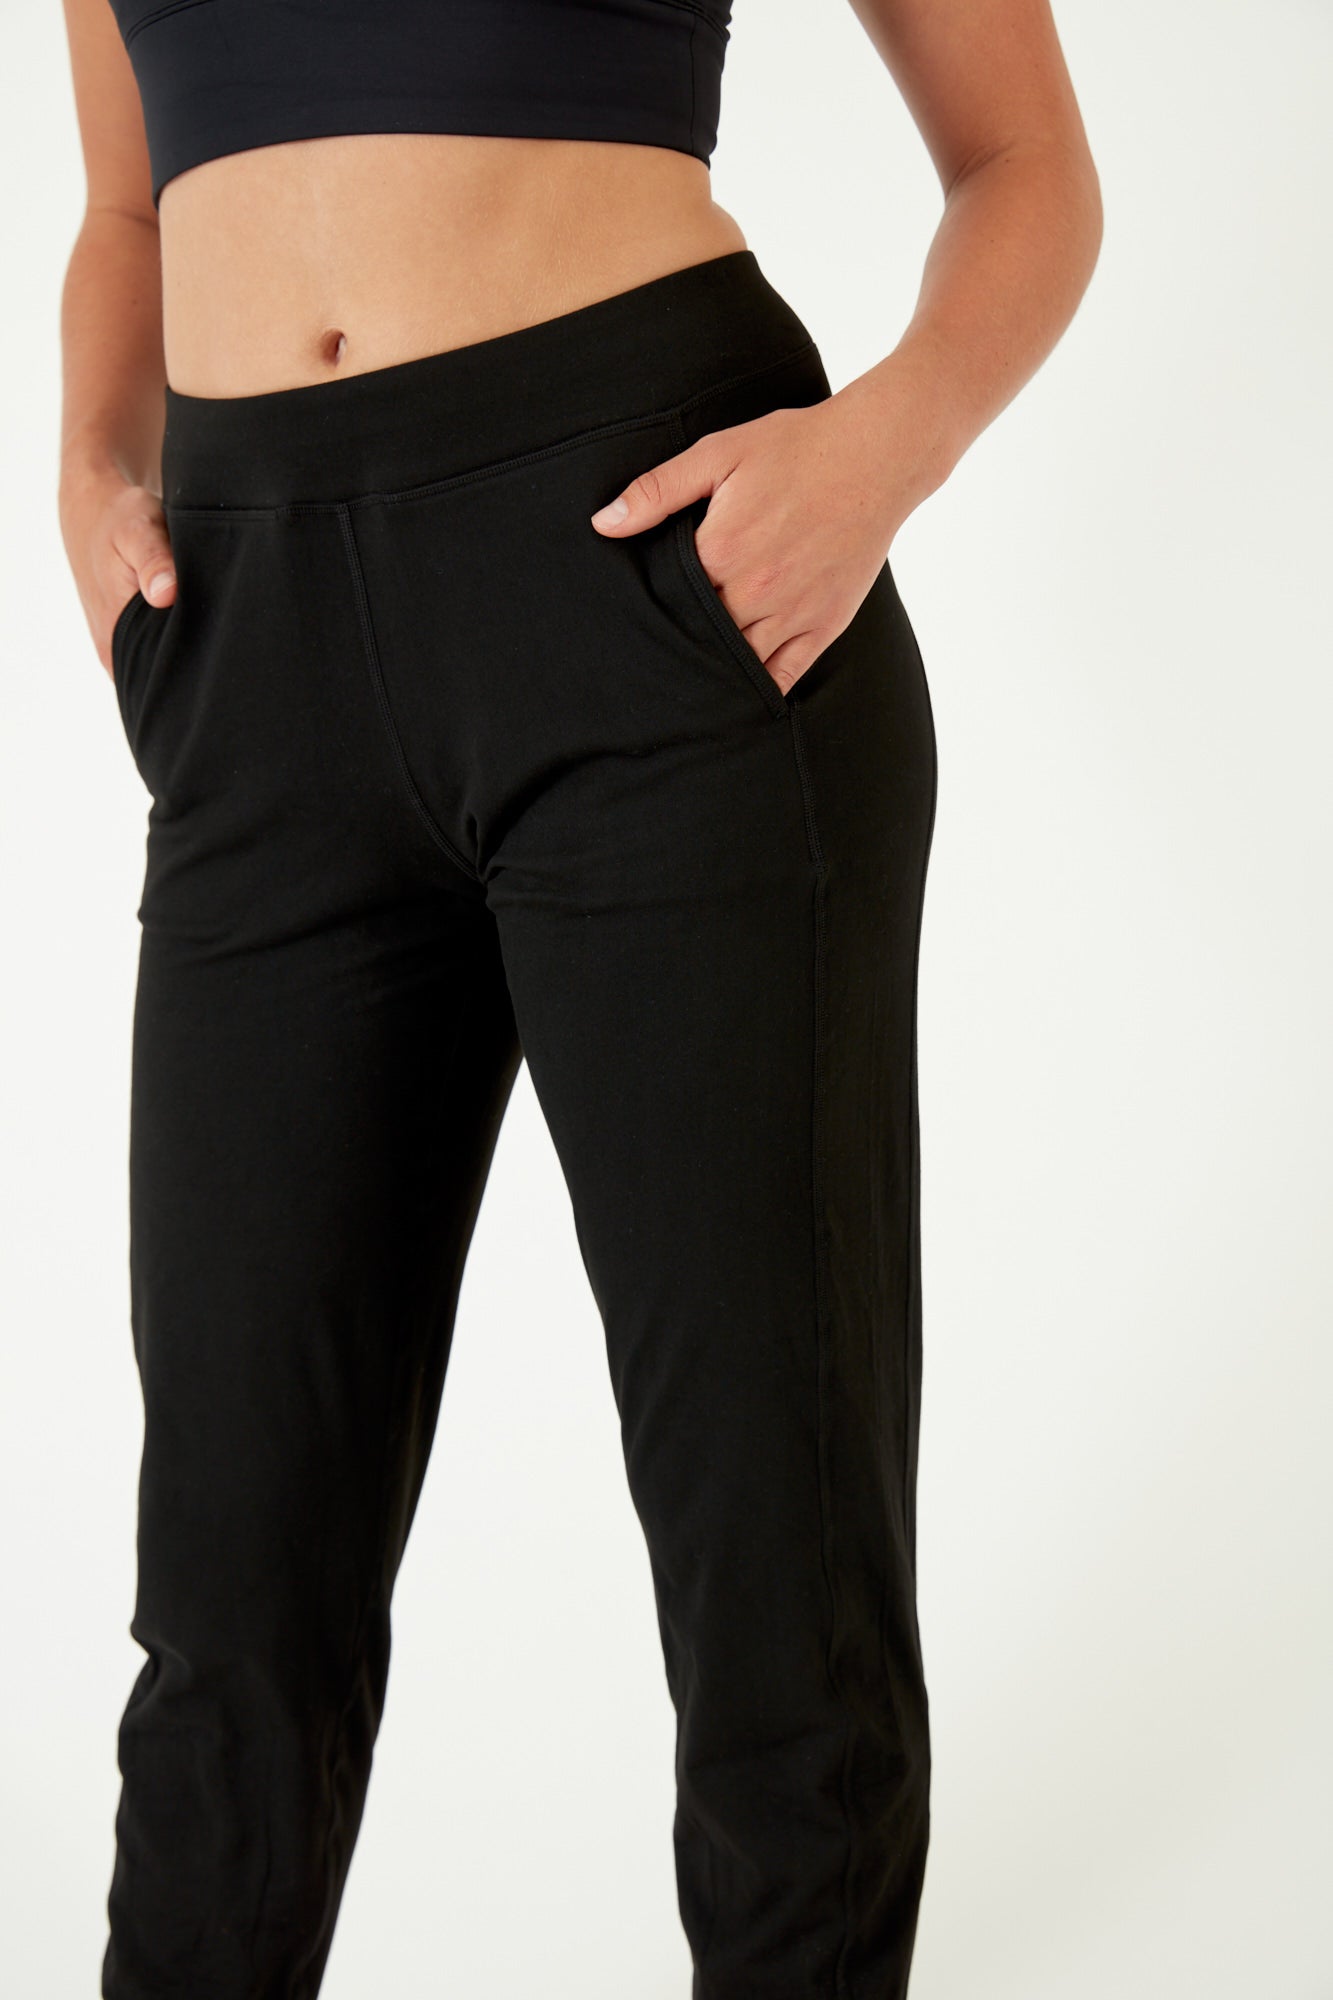 nsendm Unisex Pants Adult Yoga Pants with Pockets for Women plus